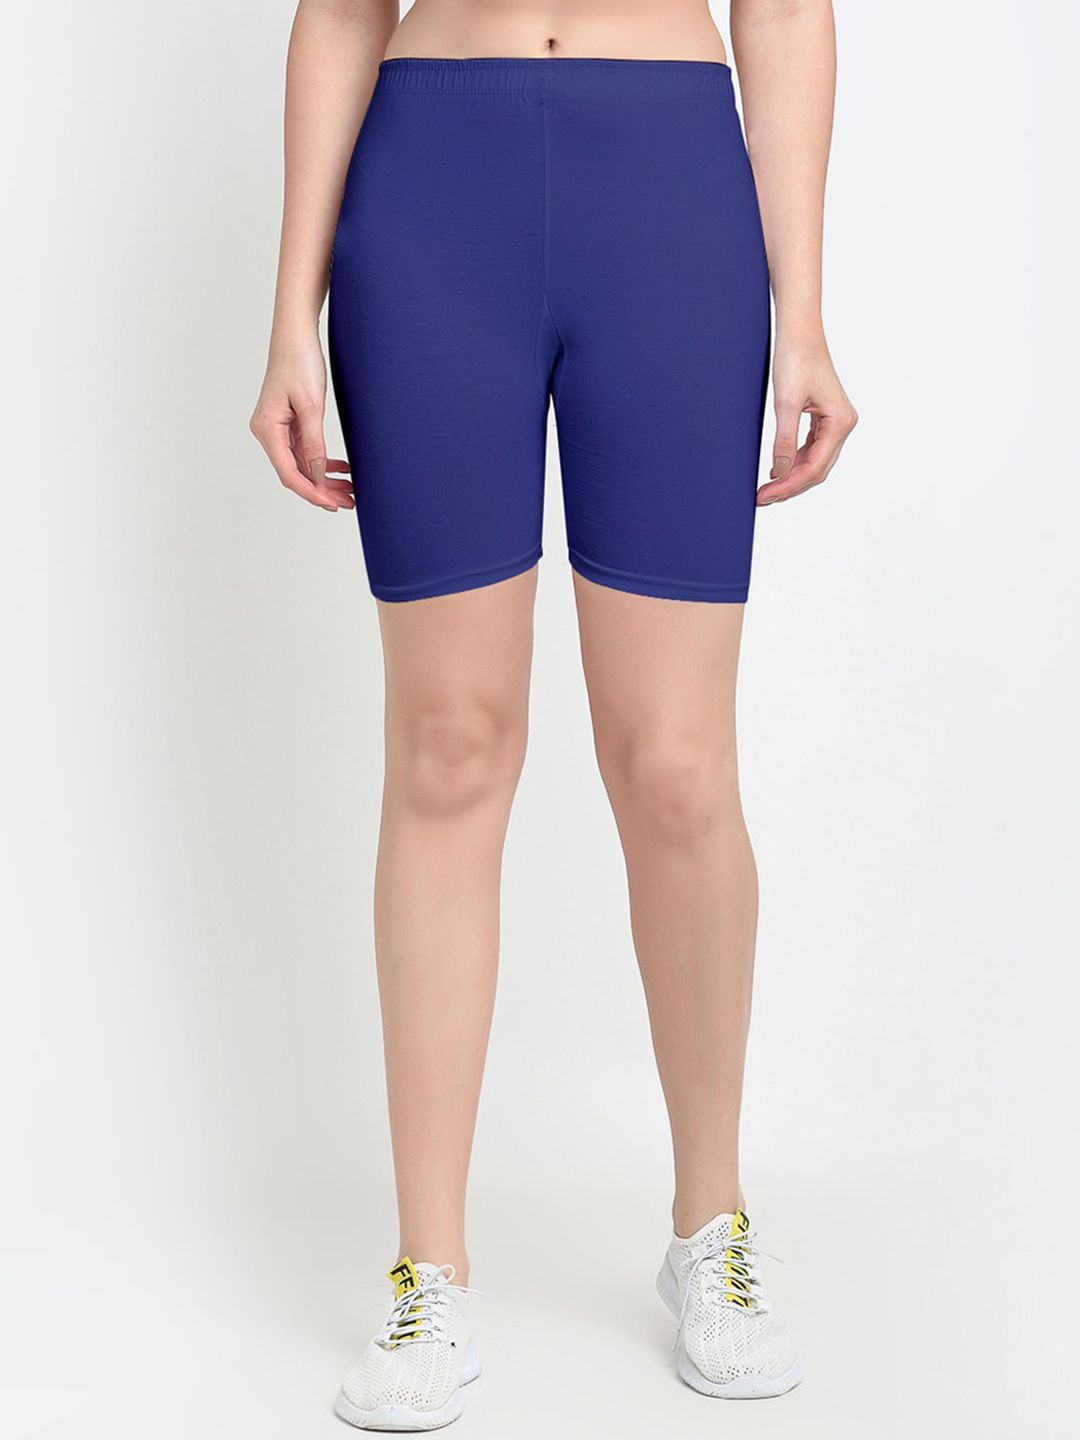 GRACIT Women Blue Biker Shorts Price in India